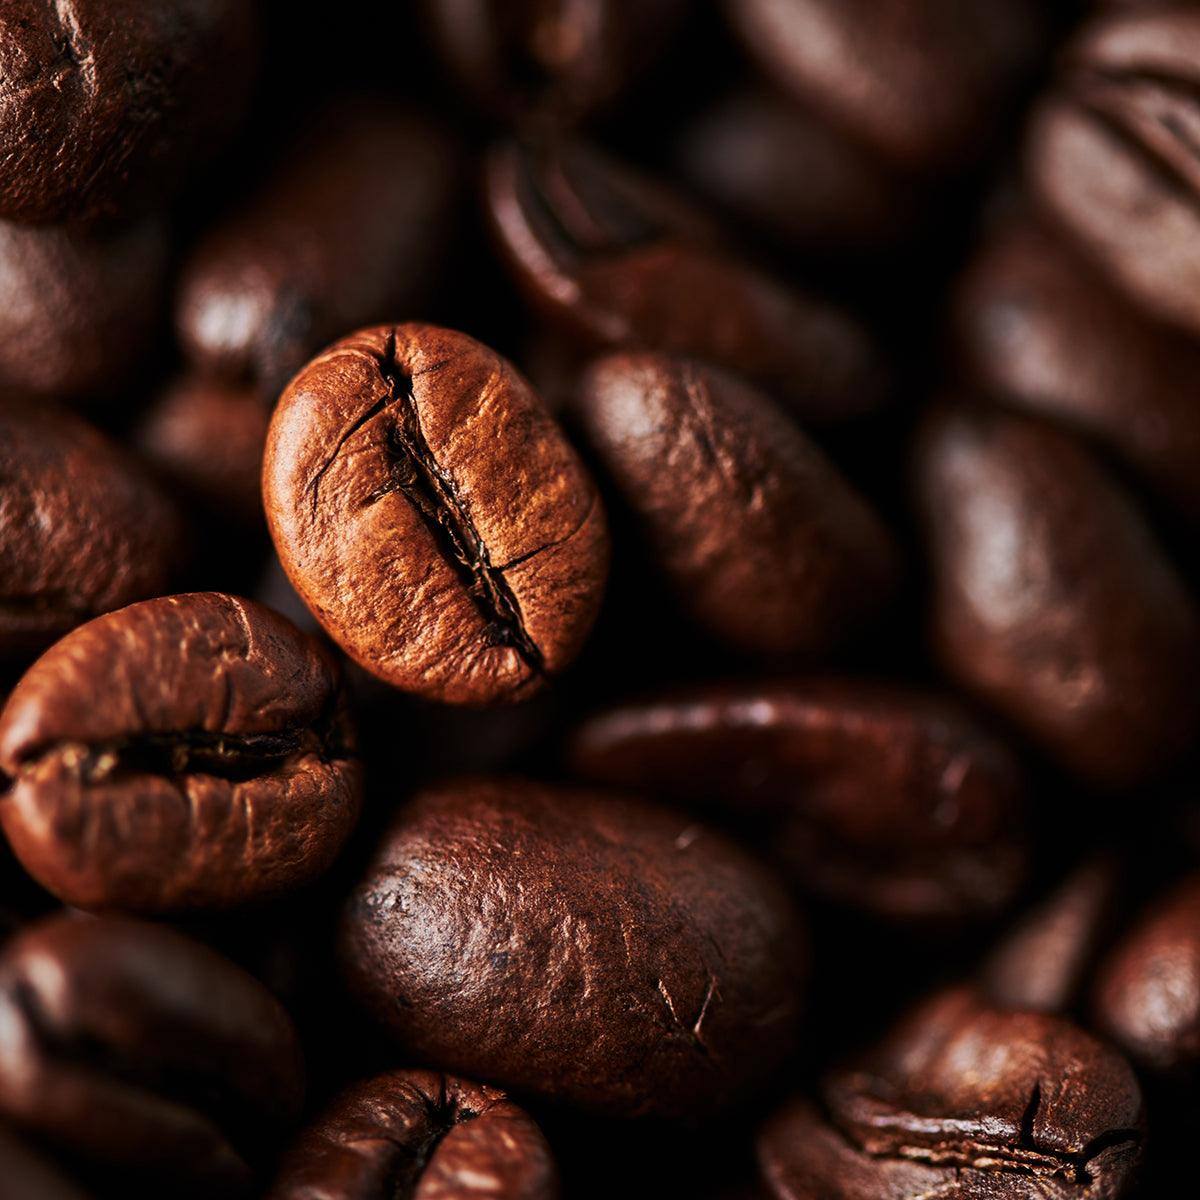 Premium Rwandan Coffee | 250g | Imisozi | Medium Roast | Beans - One Stop Chilli Shop